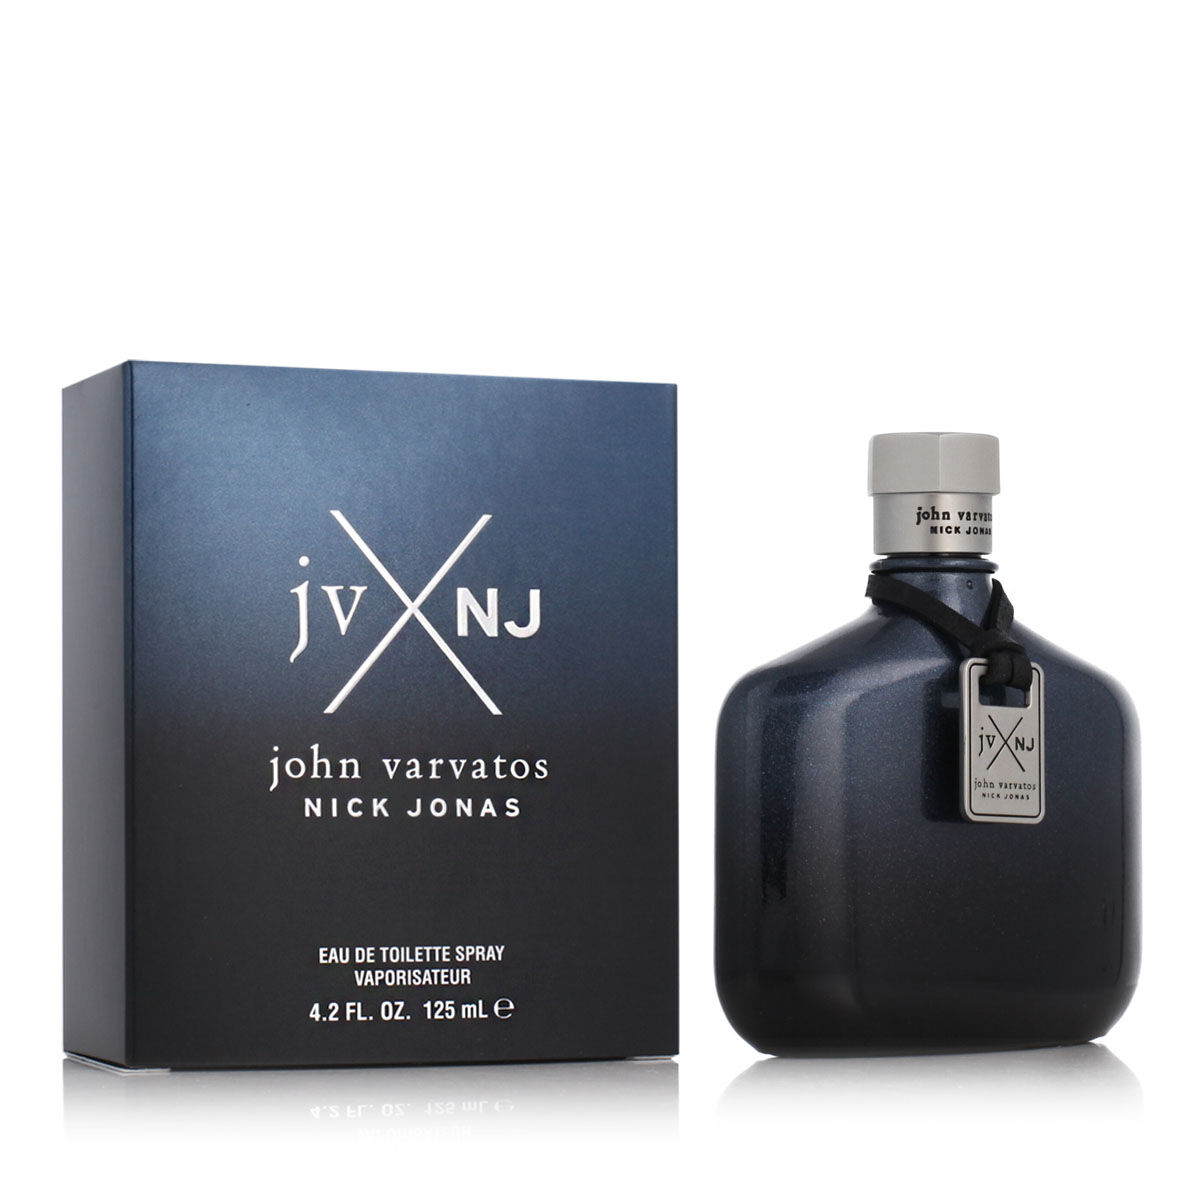 Parfum Homme John Varvatos EDT 125 ml Jv X Nj